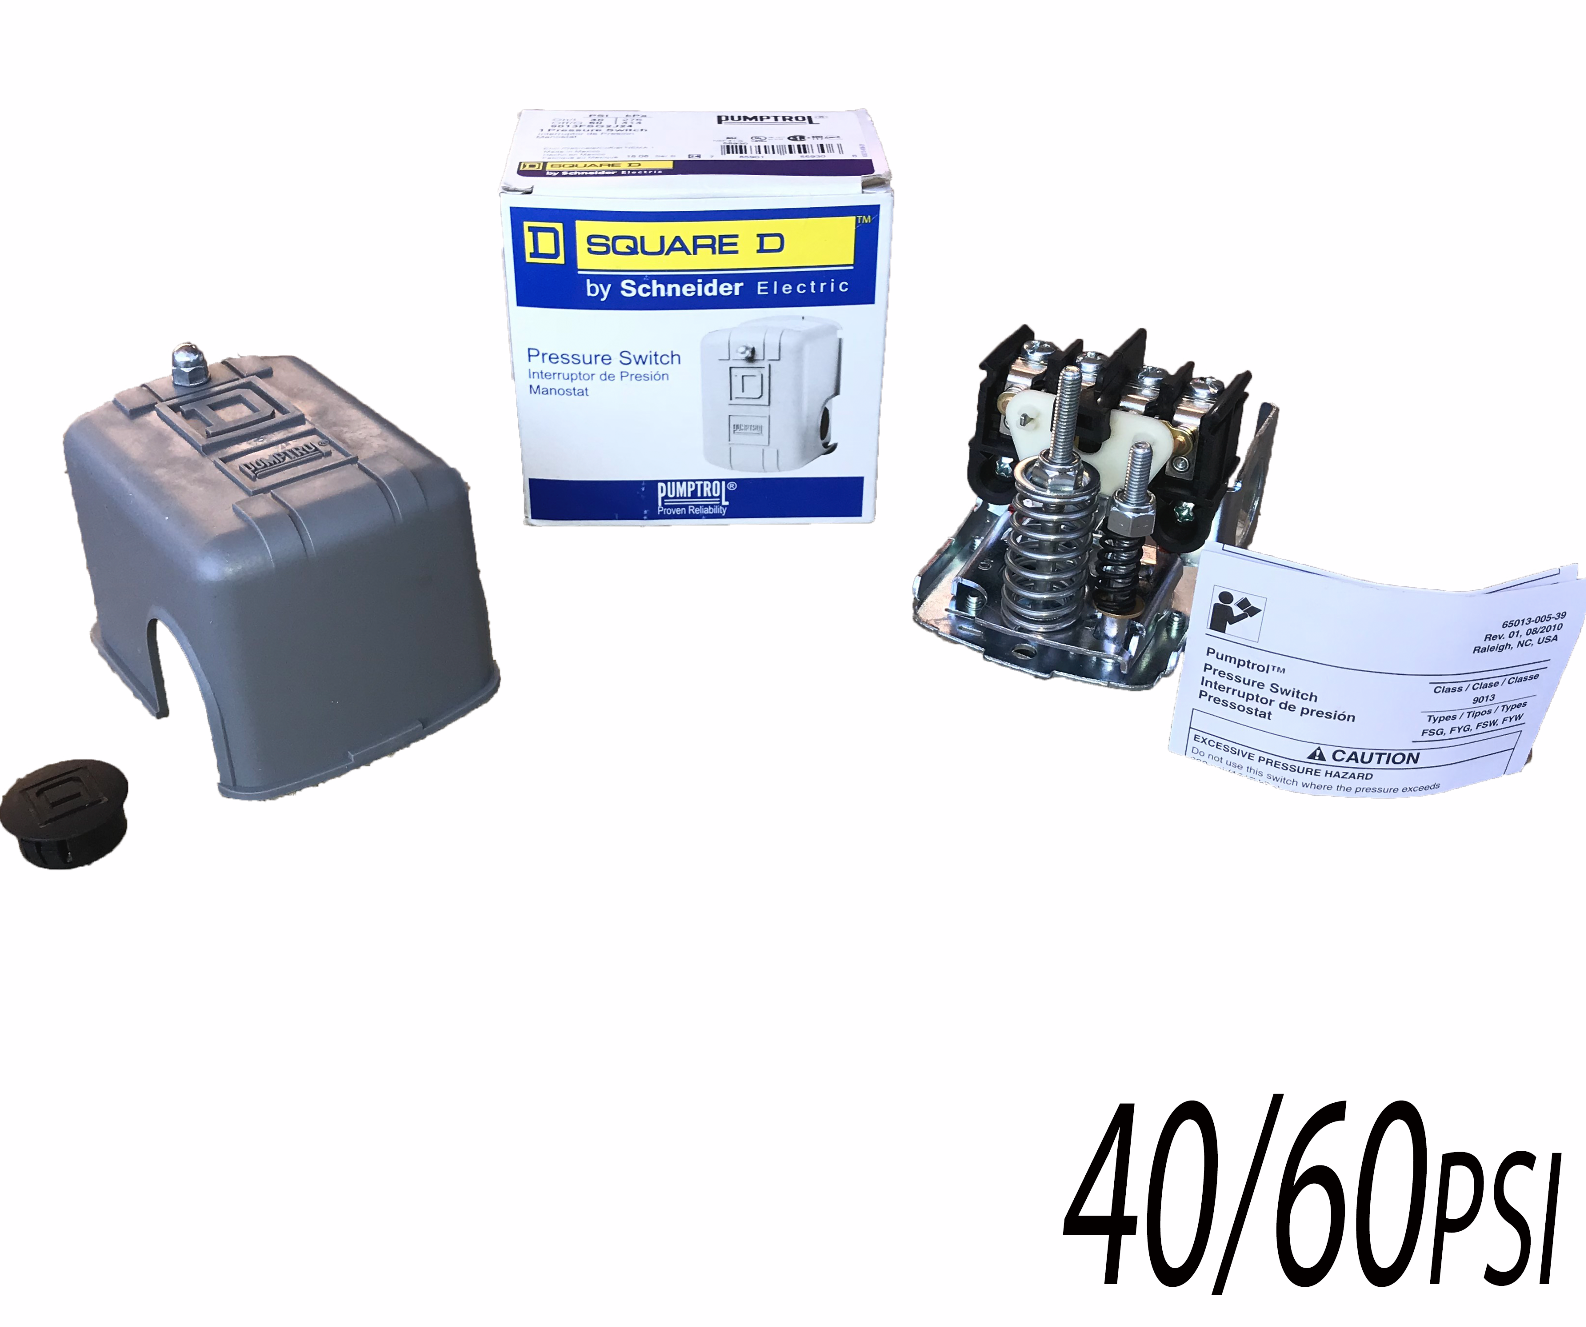 40/60psi, Square D, Water Pump Pressure Switch, #9013fsg2 1/4"fpt, Sq-d